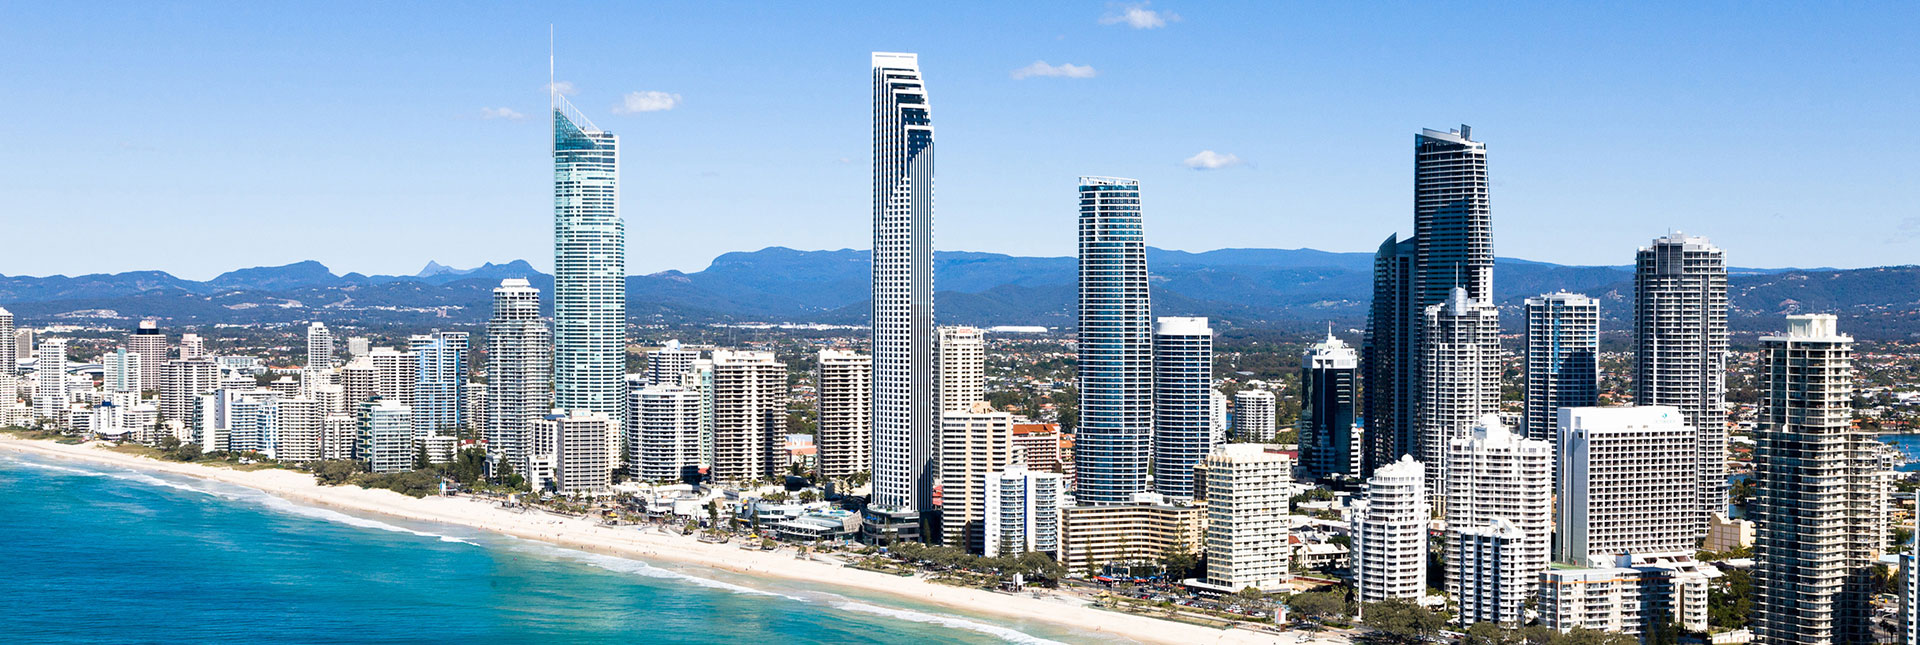 skyscrapers on the Gold Coast Coastline with beach